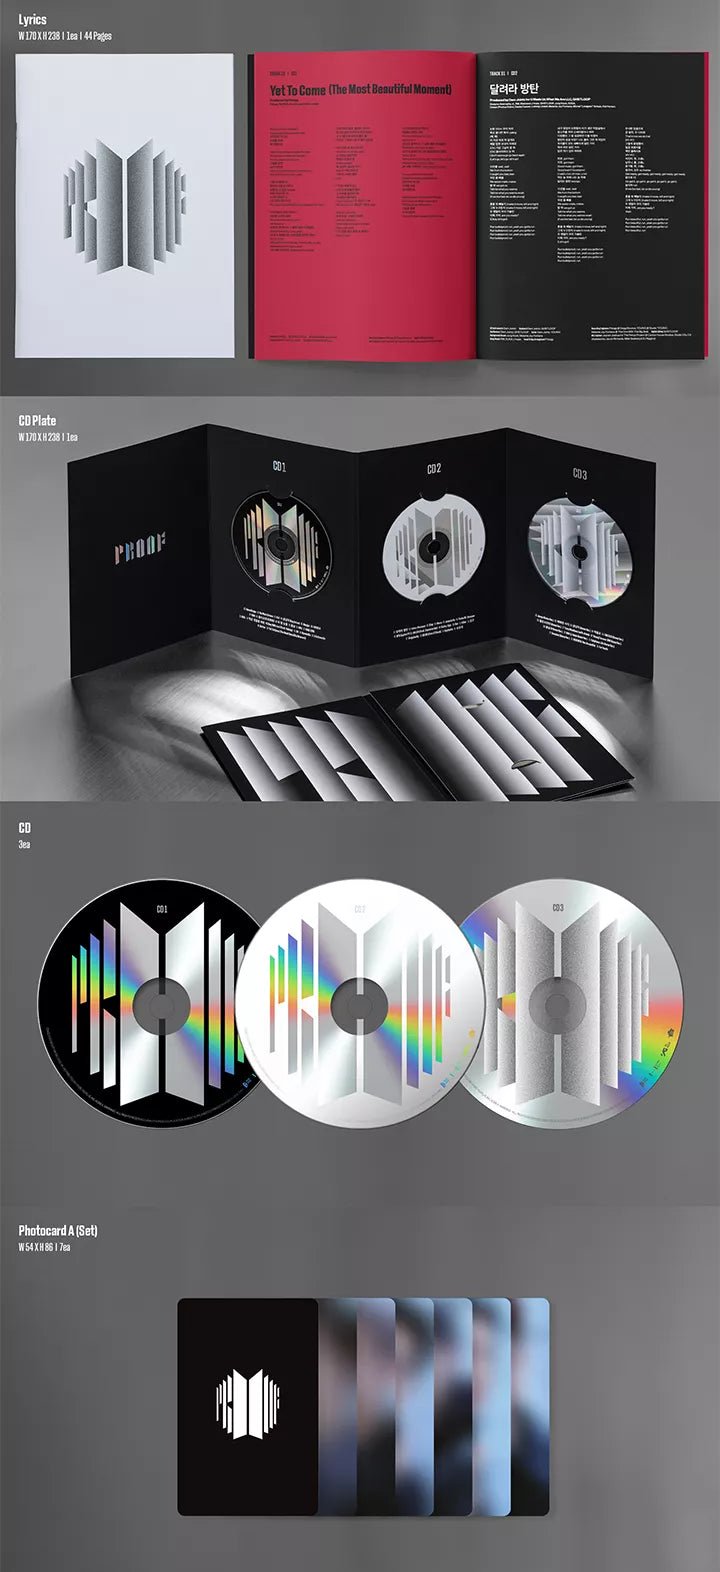 Full Album] B T S (방탄소년단) - P r o o f 